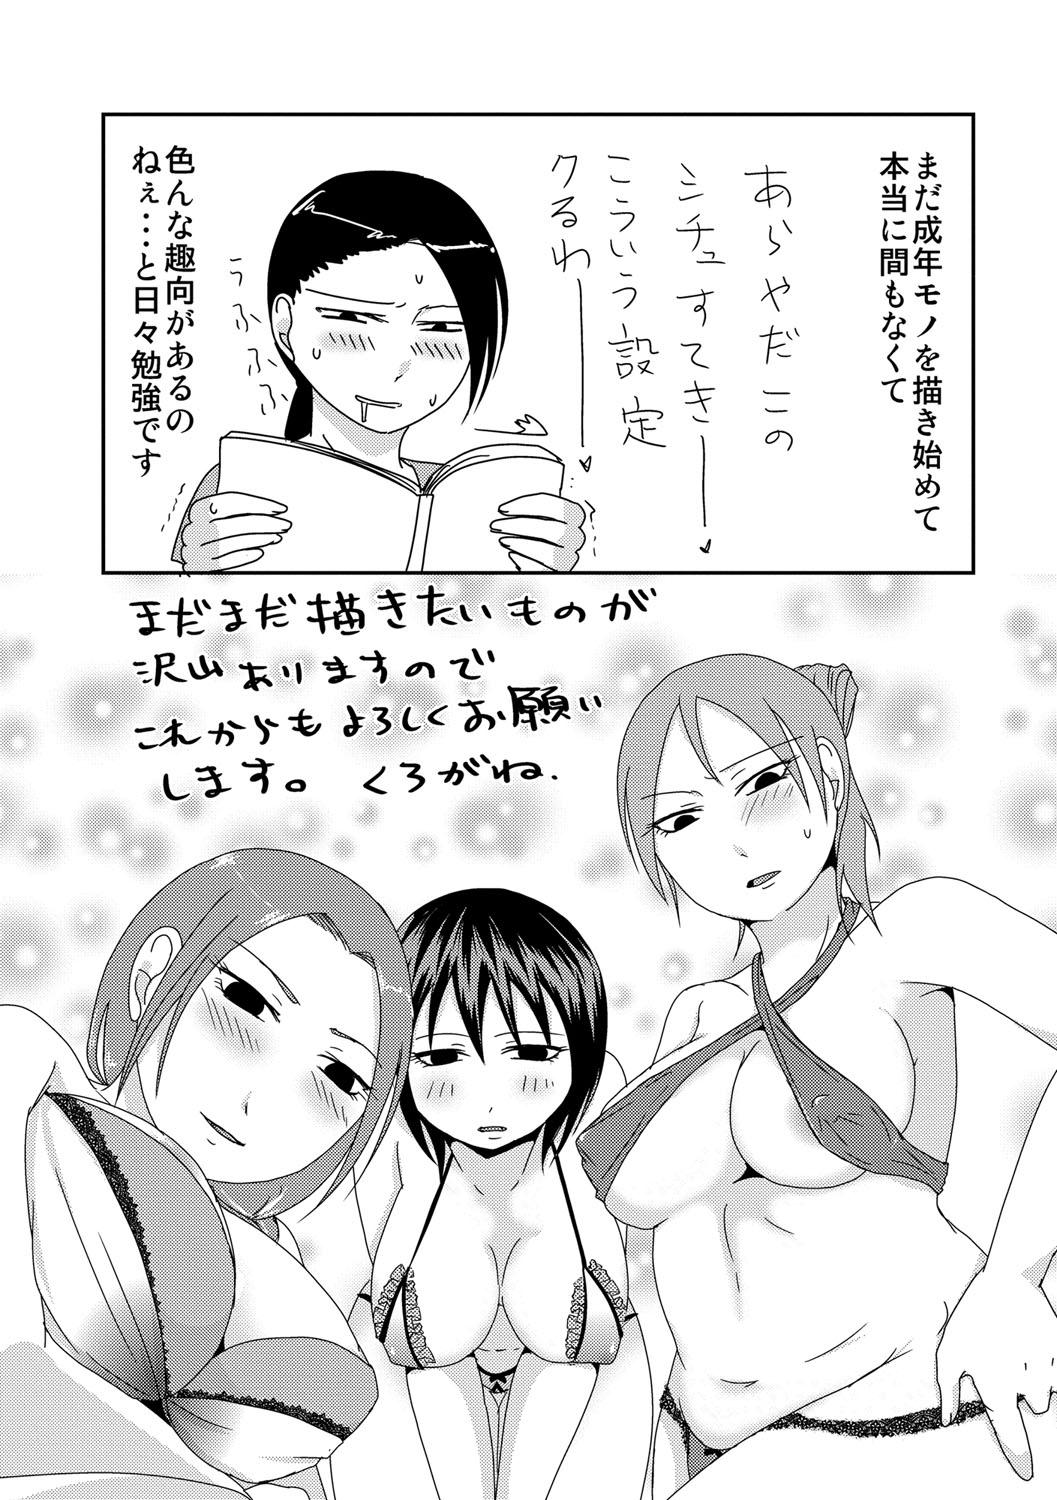 [Kurogane] Komochi x 1-san to Koe Dashi Genkin SEX - Voiceless SEX With the one-time divorcee has Children [Digital] 193